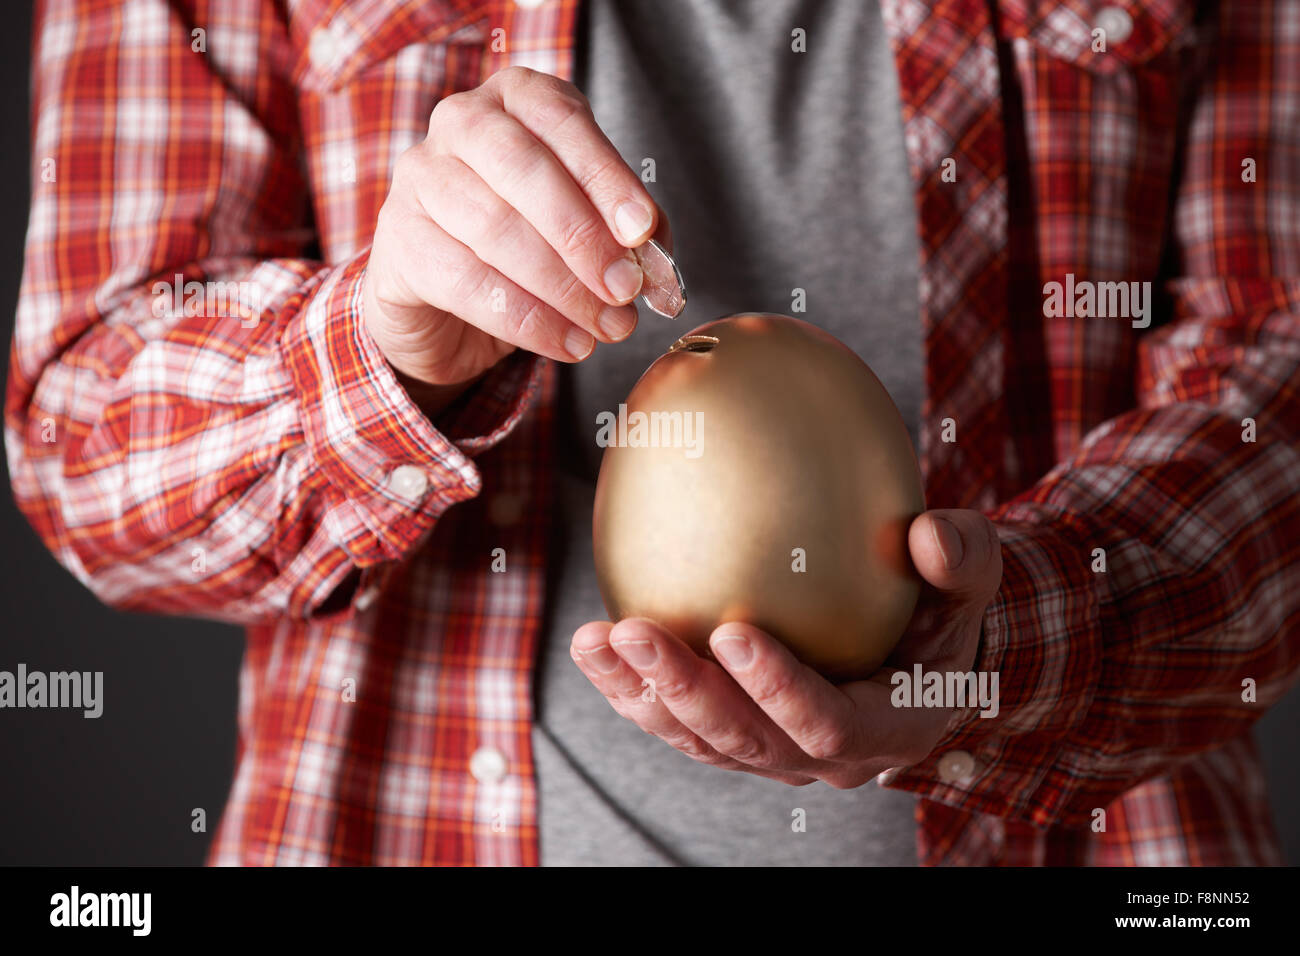 Man Putting Money Into Golden Egg Shaped Money Box Stock Photo